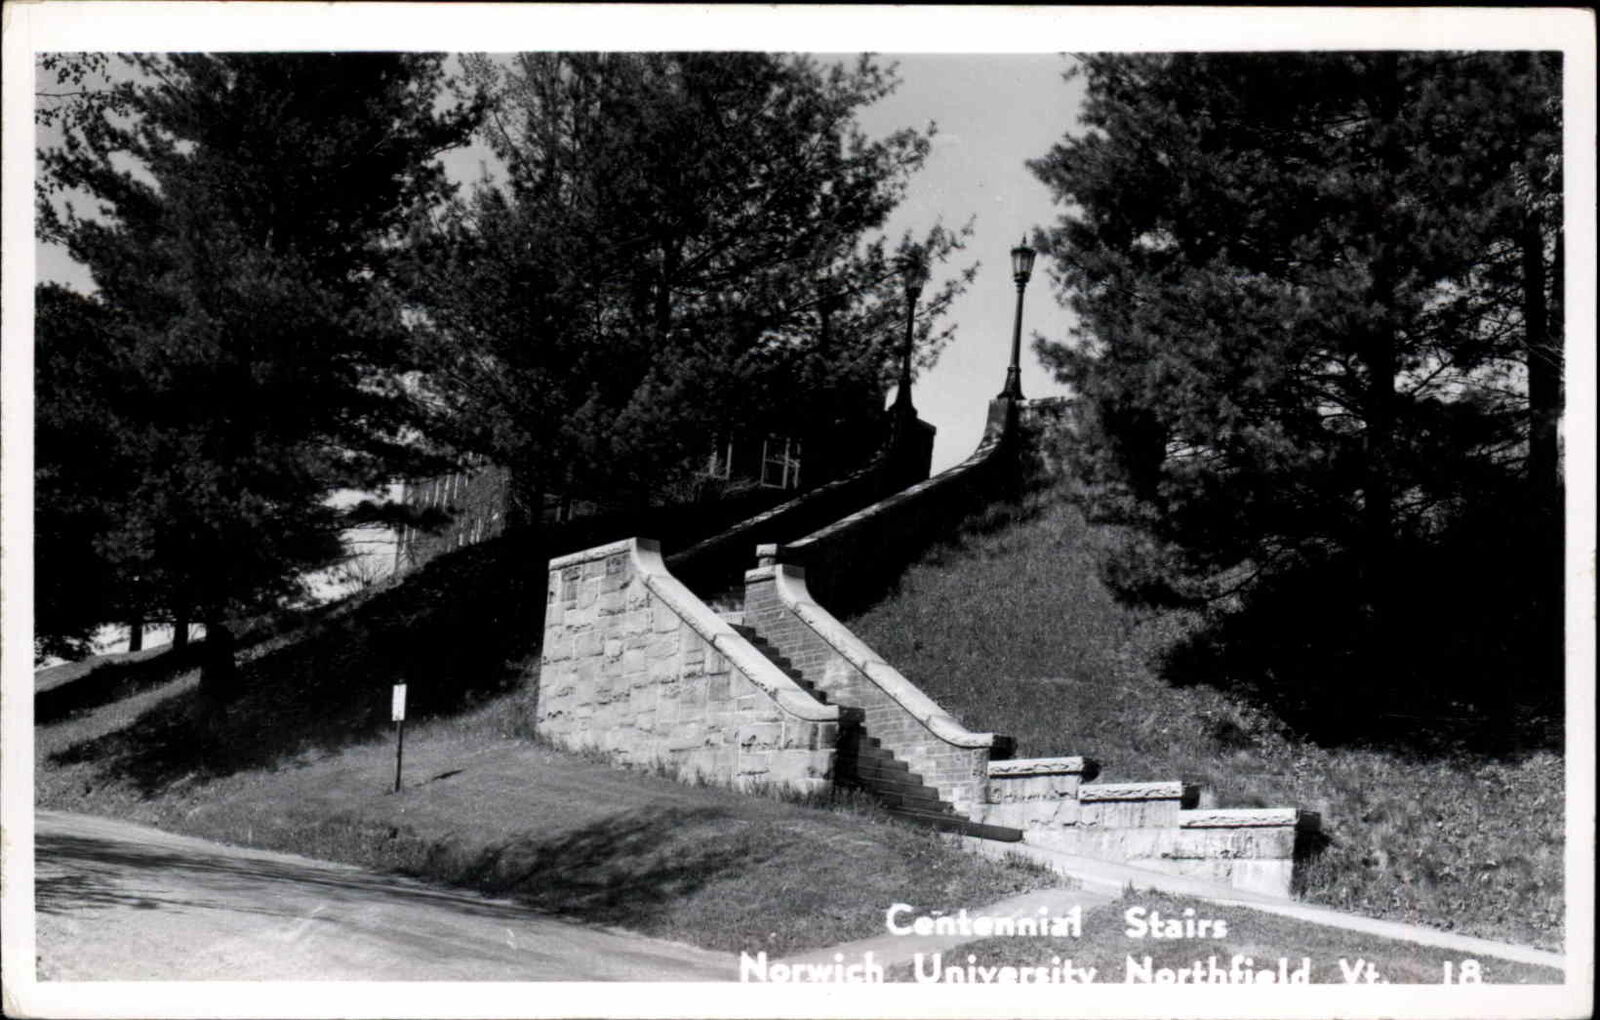 Northfield Vermont VT Norwich University Centennial Stairs Real Photo Postcard